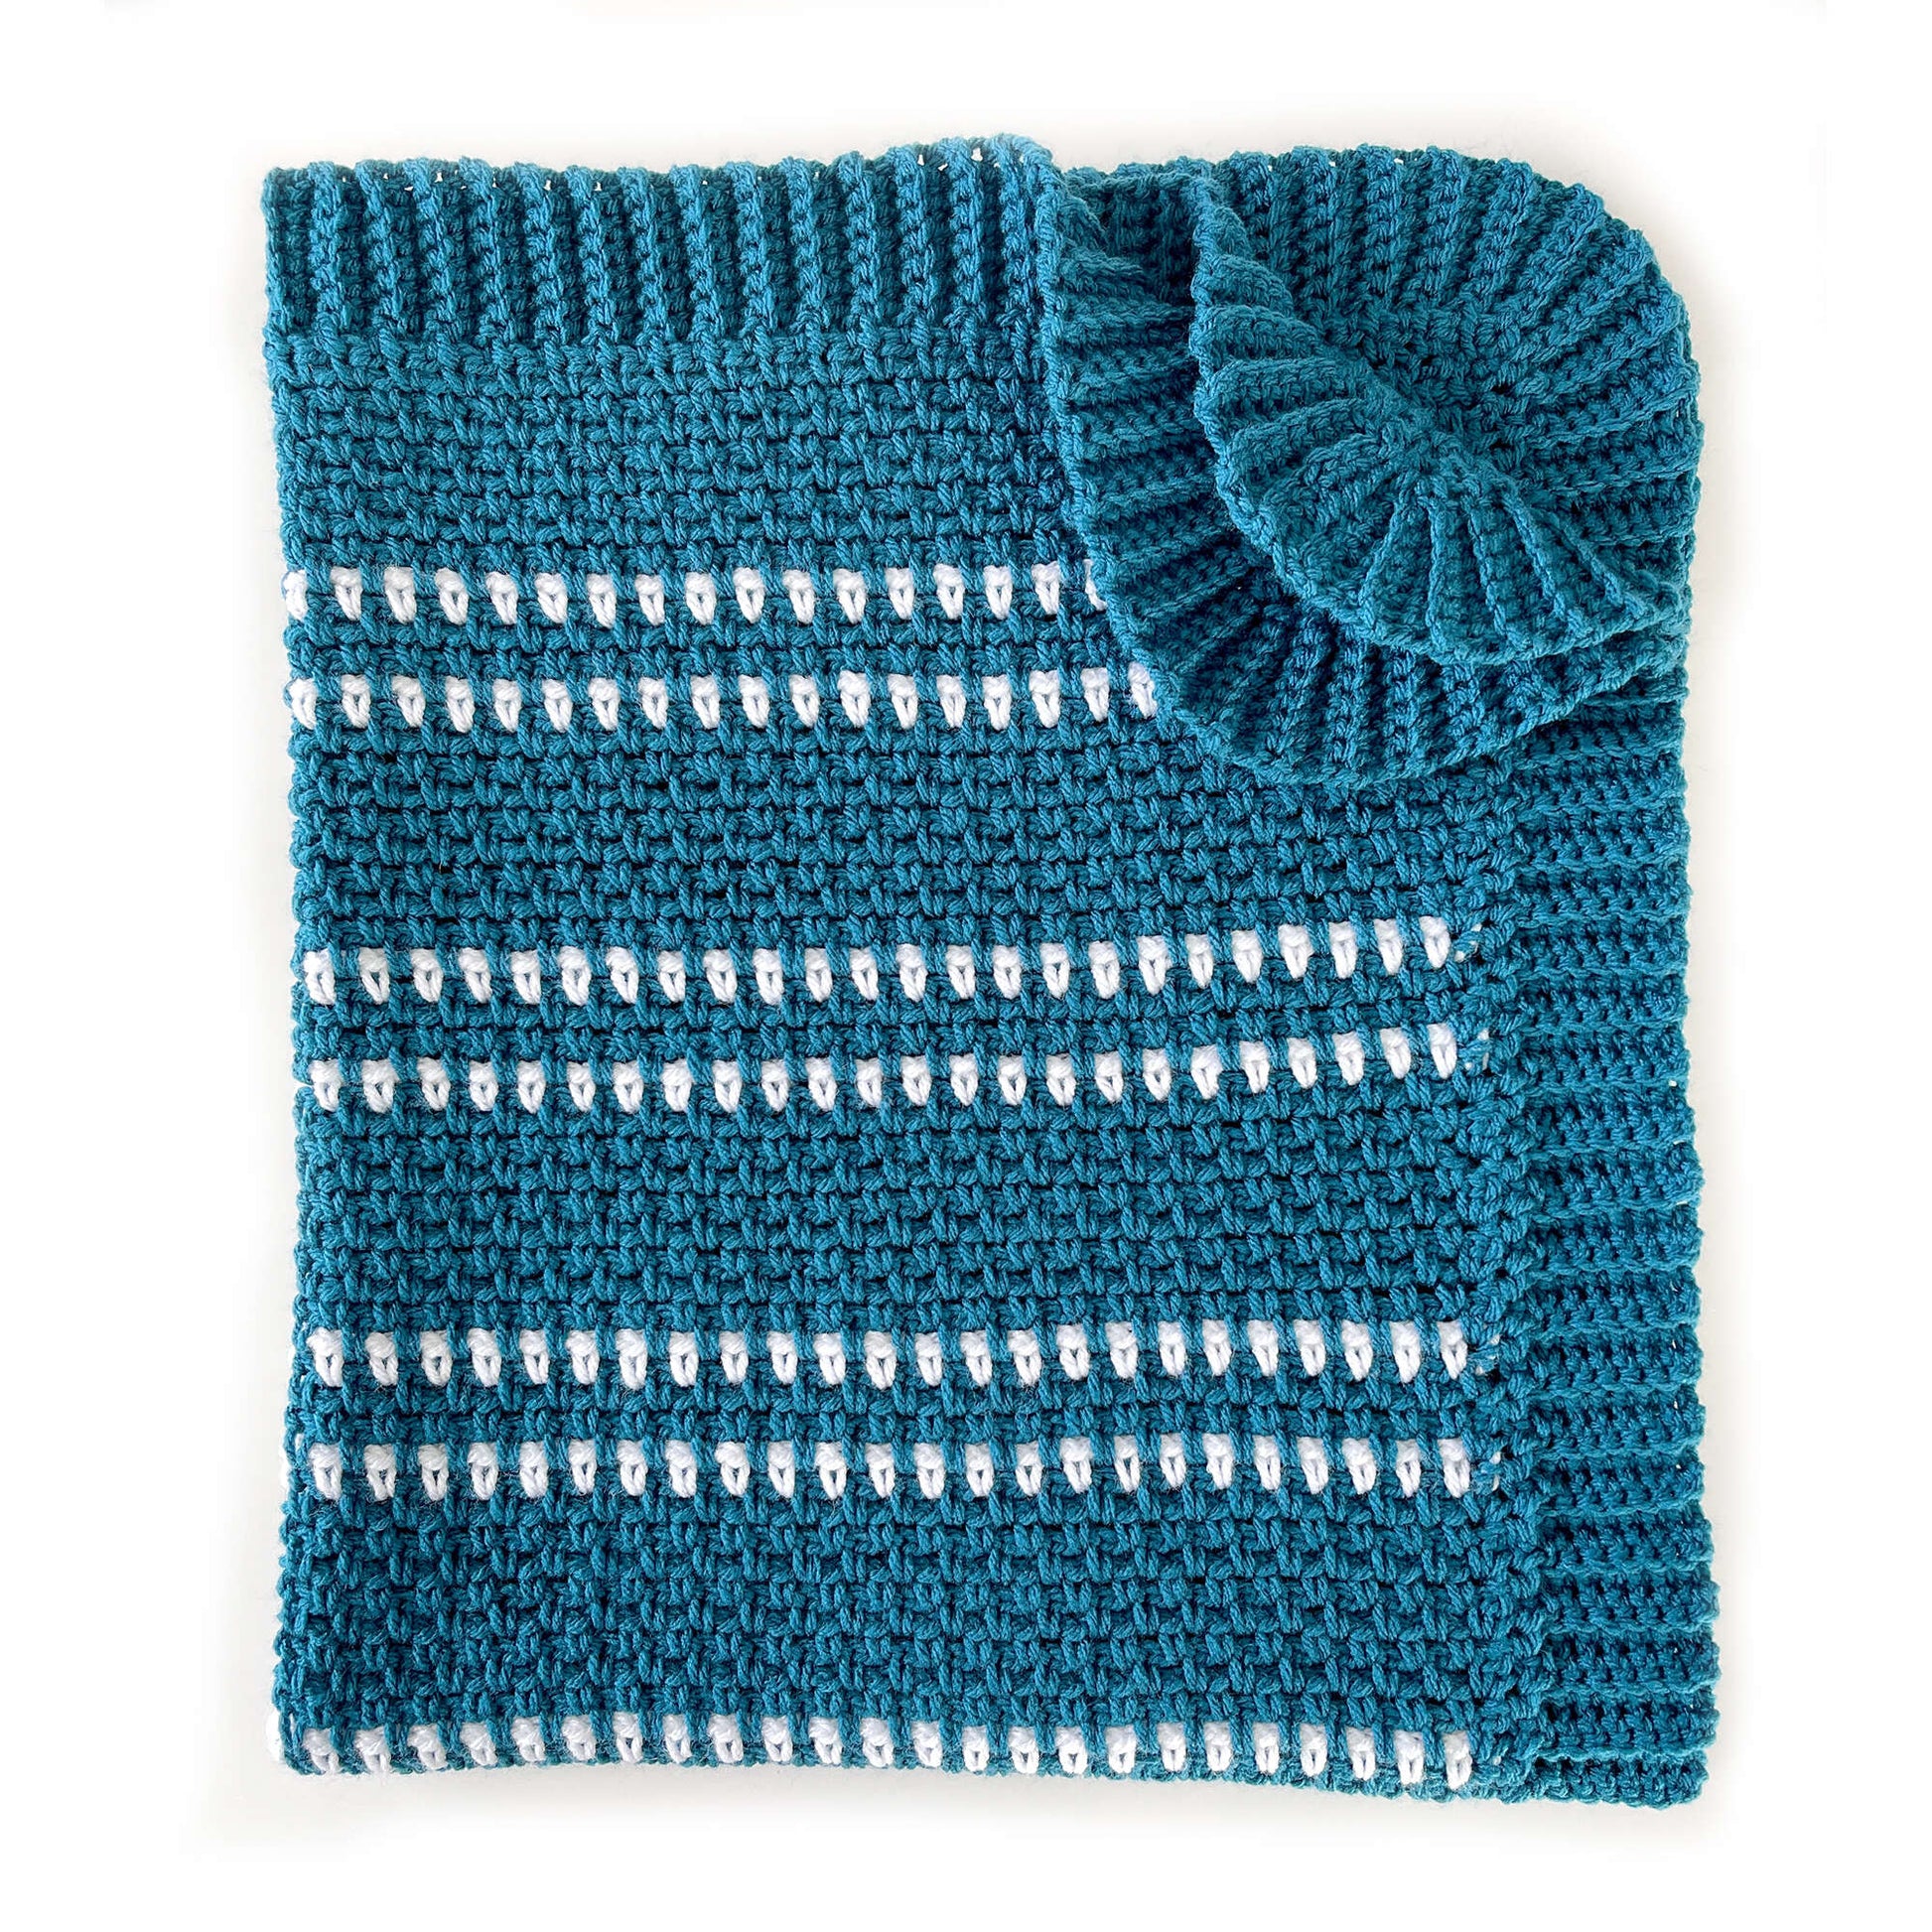 37 Bernat Blanket Yarn Crochet Patterns: Free Super Bulky Patterns